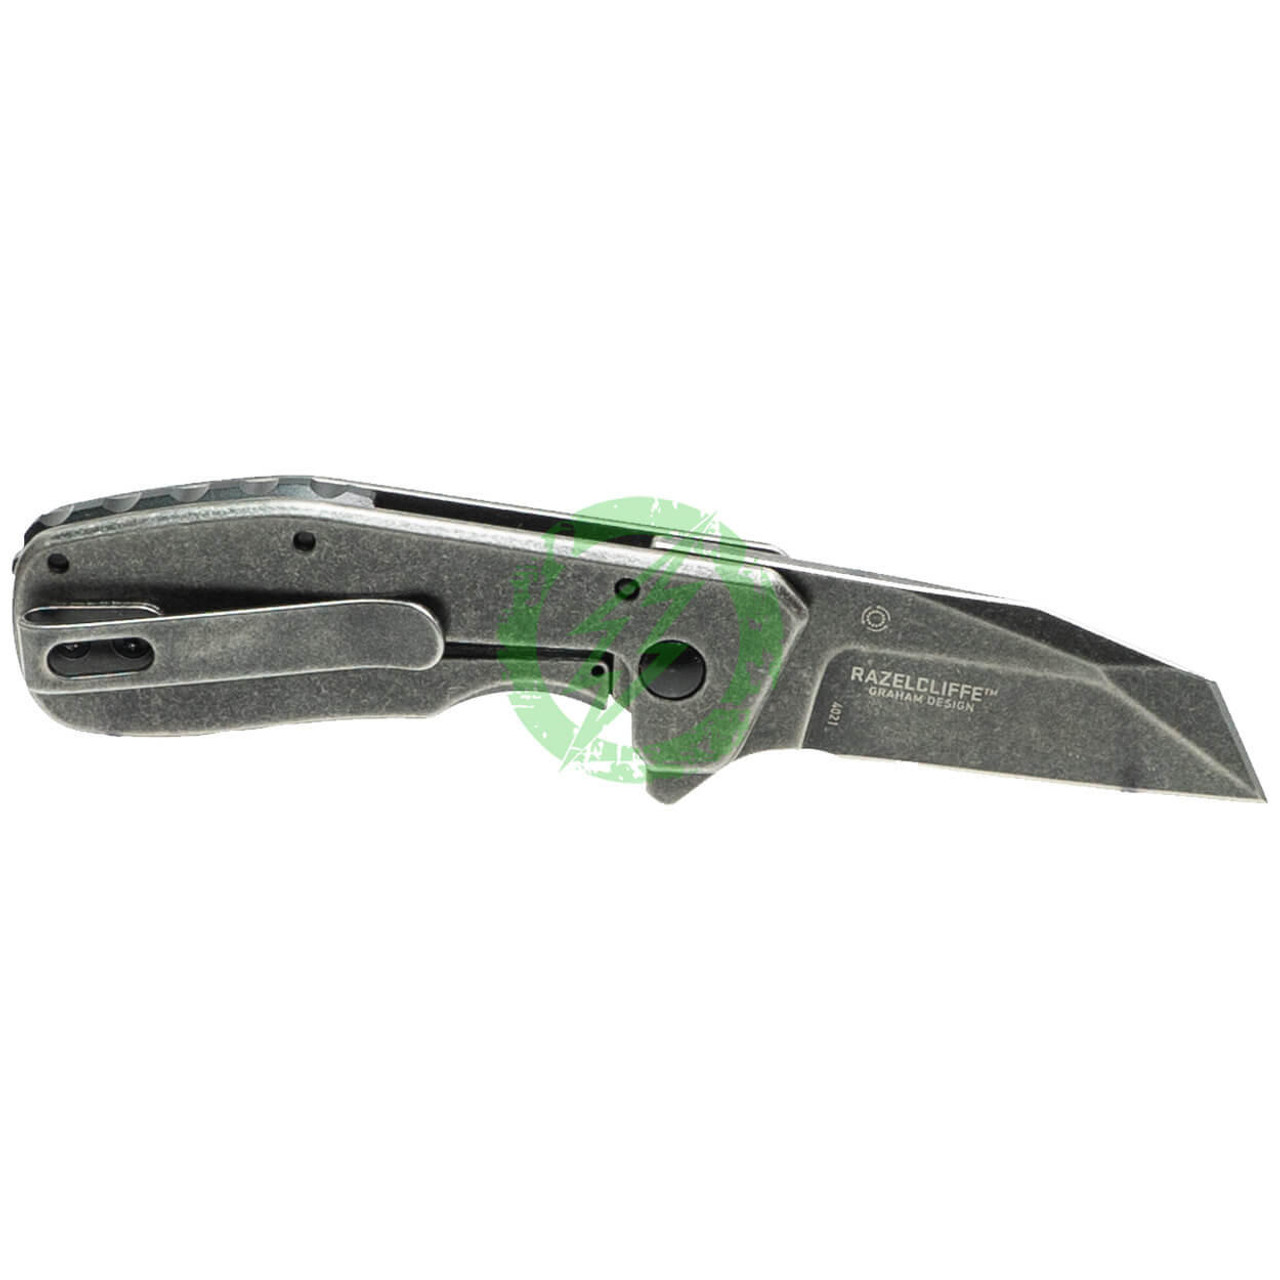 CRKT (Columbia River Knife Tool) CRKT Razelcliffe Compact Blackout Folding Blade Knife 